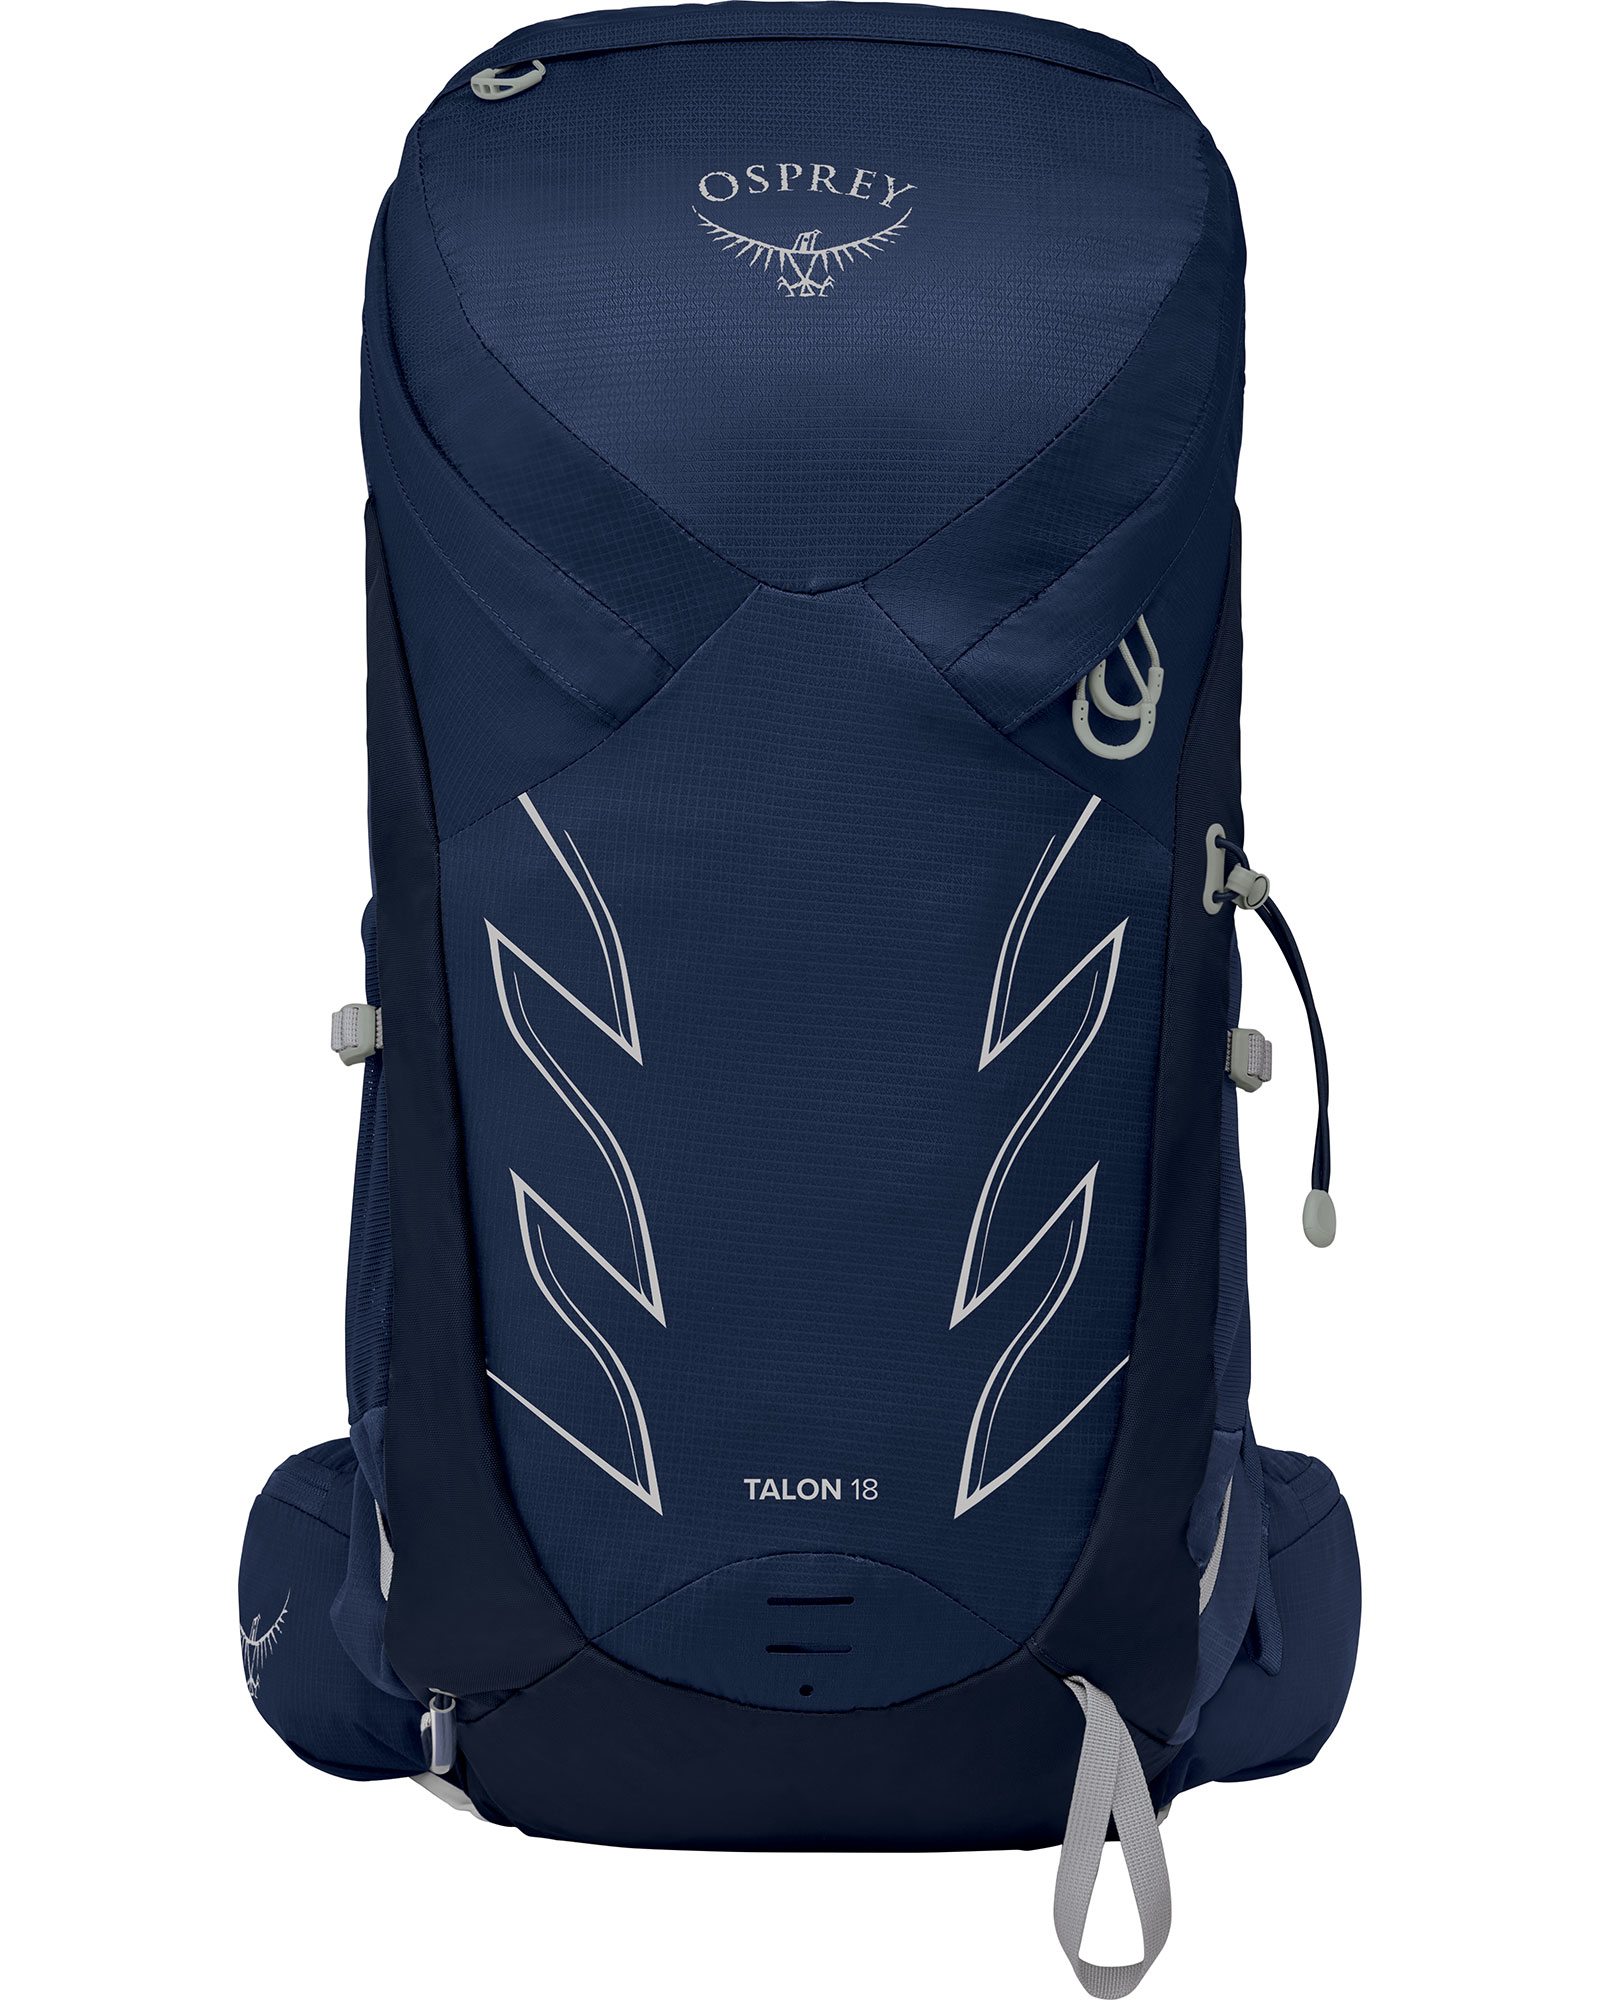 Osprey Talon 18 Backpack - Ceramic Blue